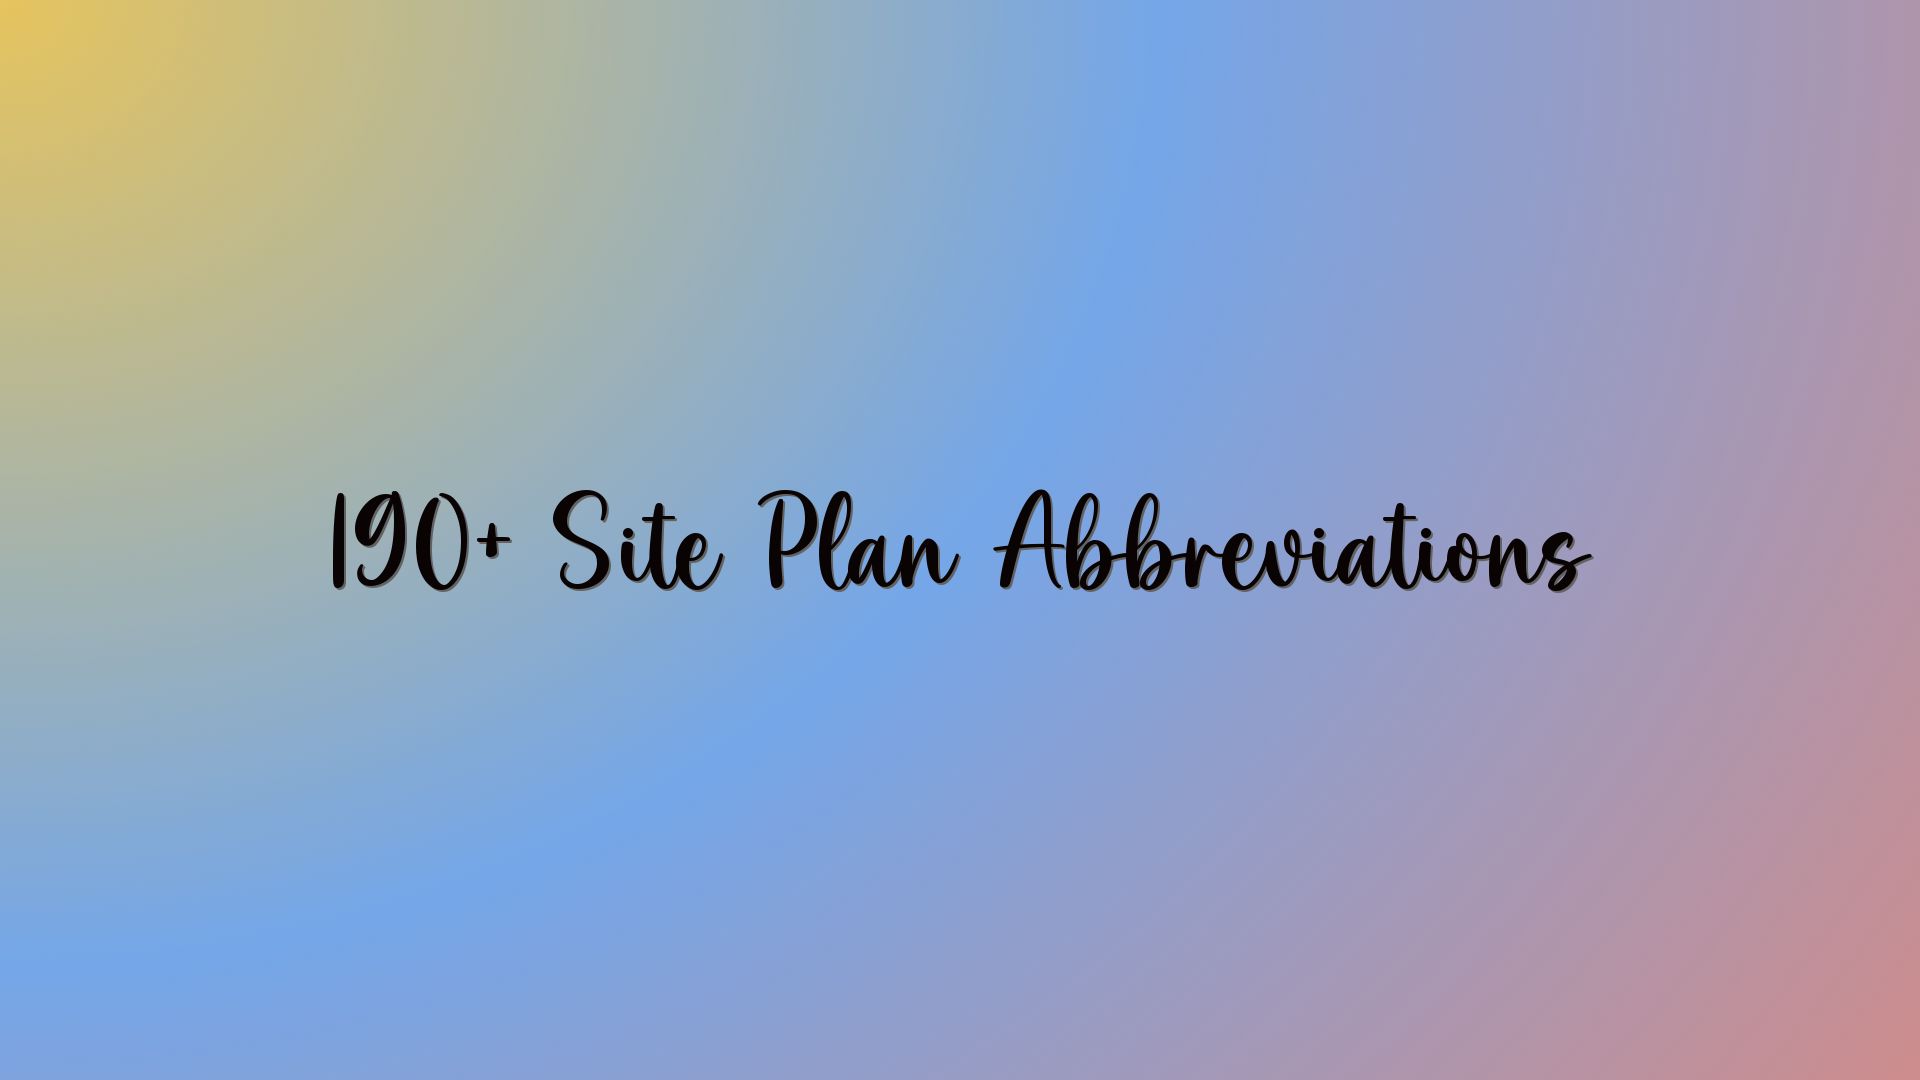 190+ Site Plan Abbreviations